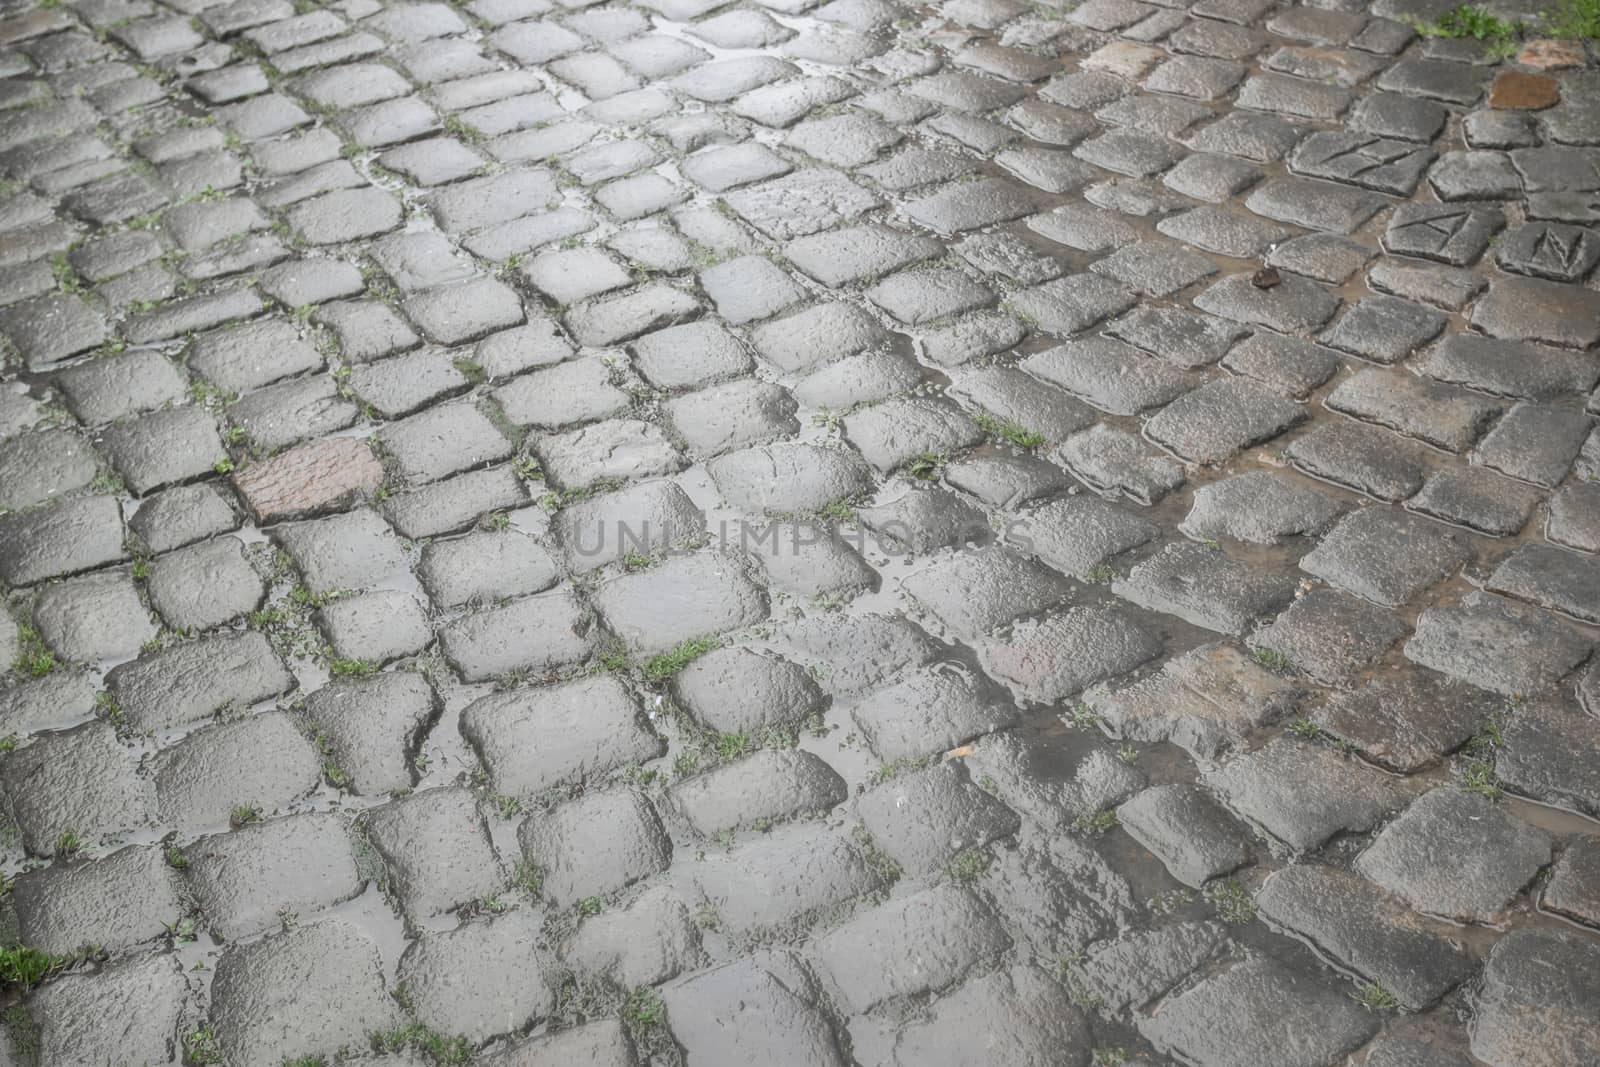 Floor of paving stones wet from the rain